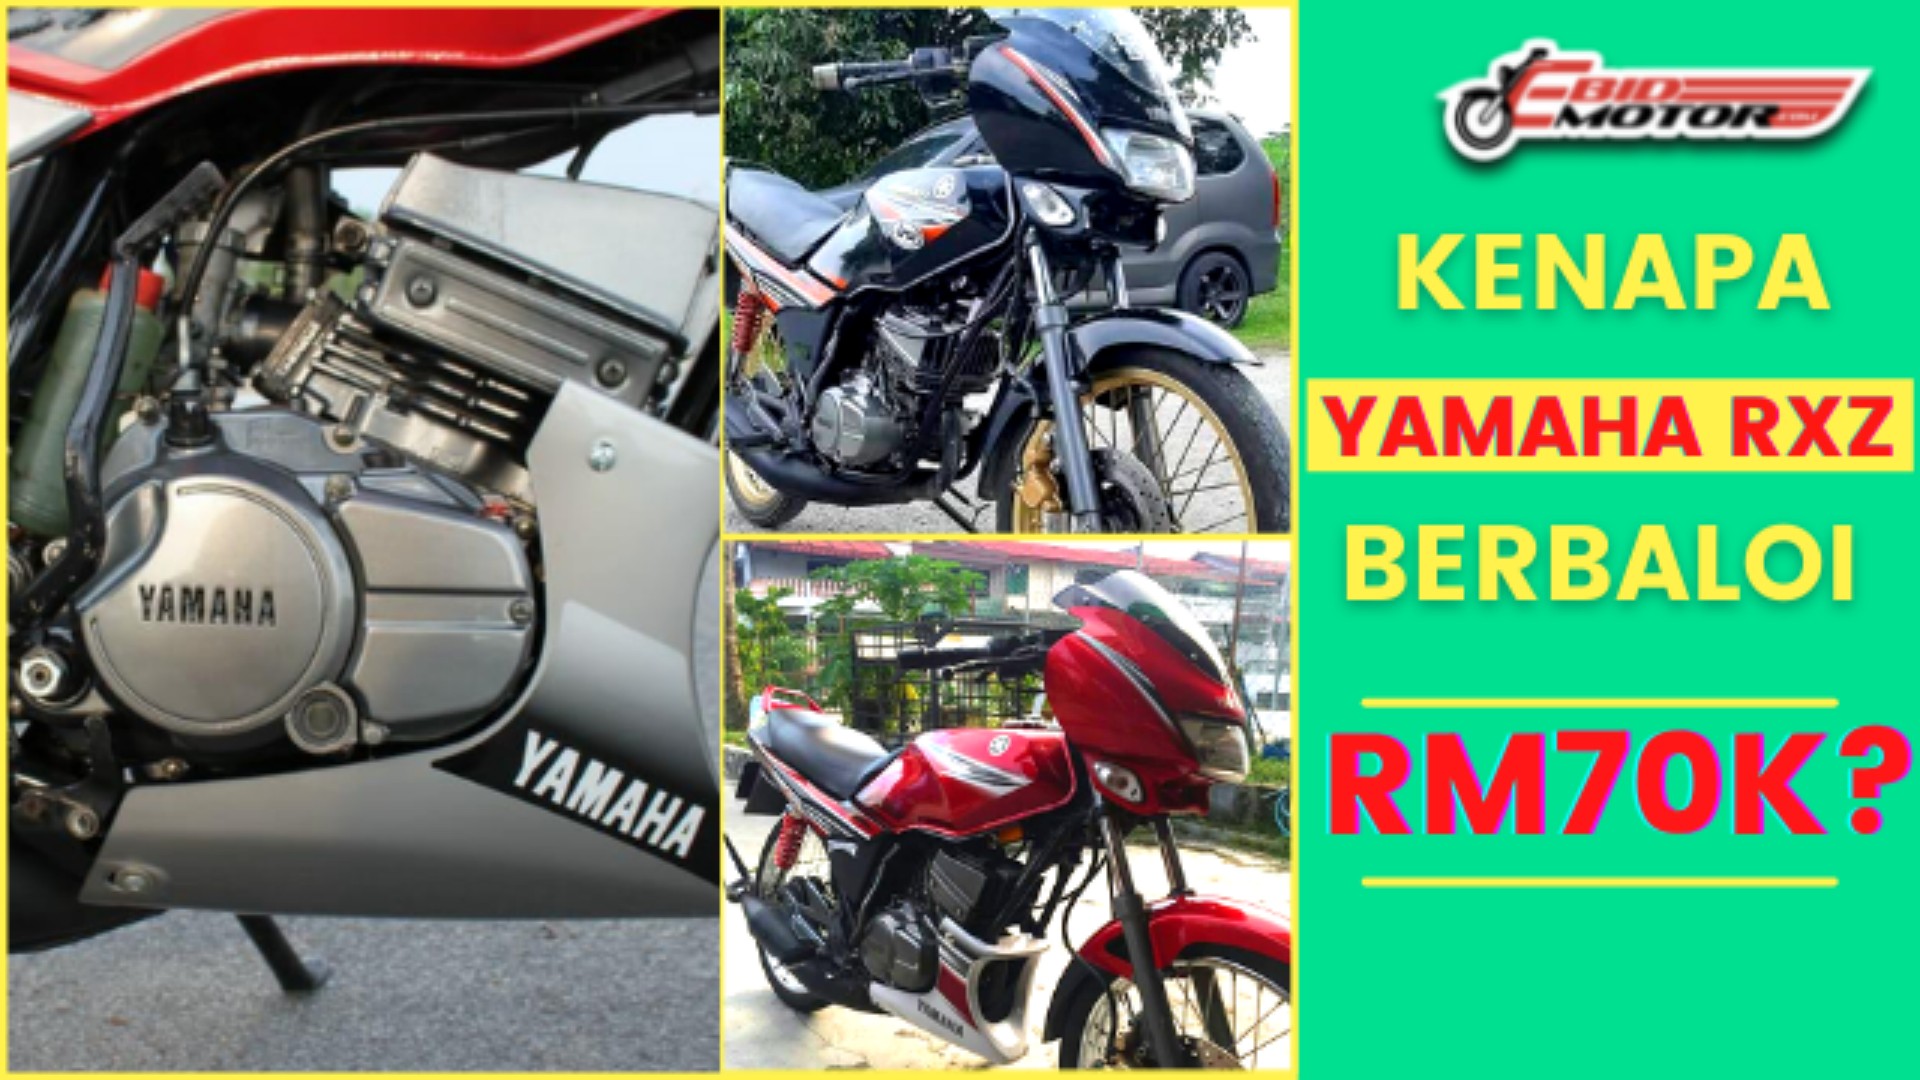 Sebab Harga Yamaha RXZ RM70,000! [Penjelasan Dari Tuan Motor!]